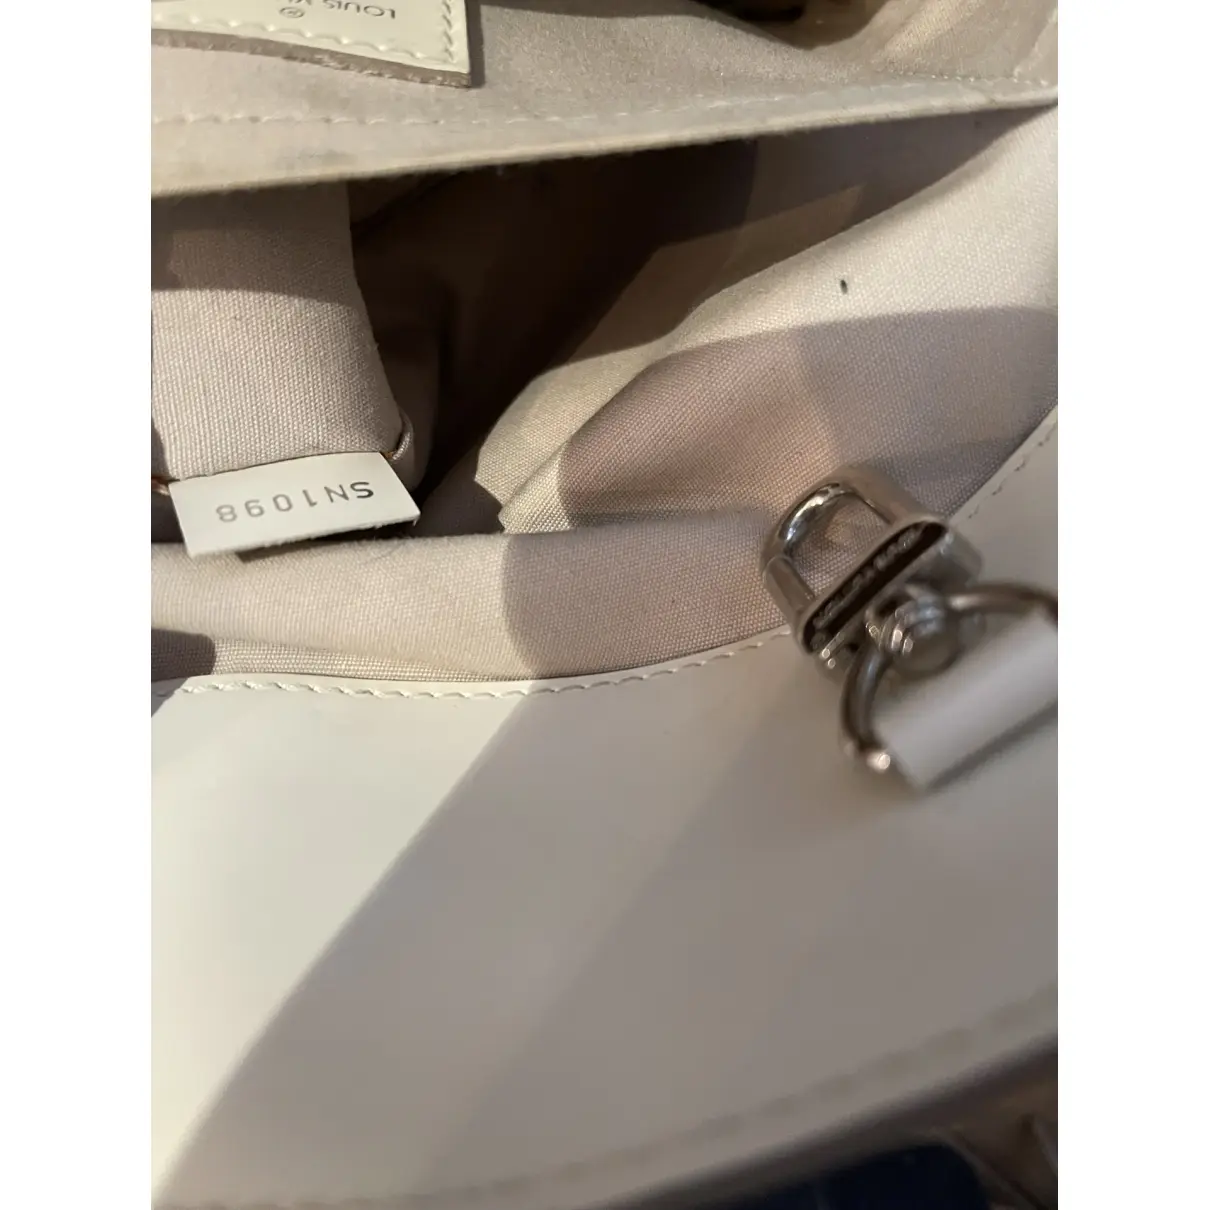 Passy leather handbag Louis Vuitton